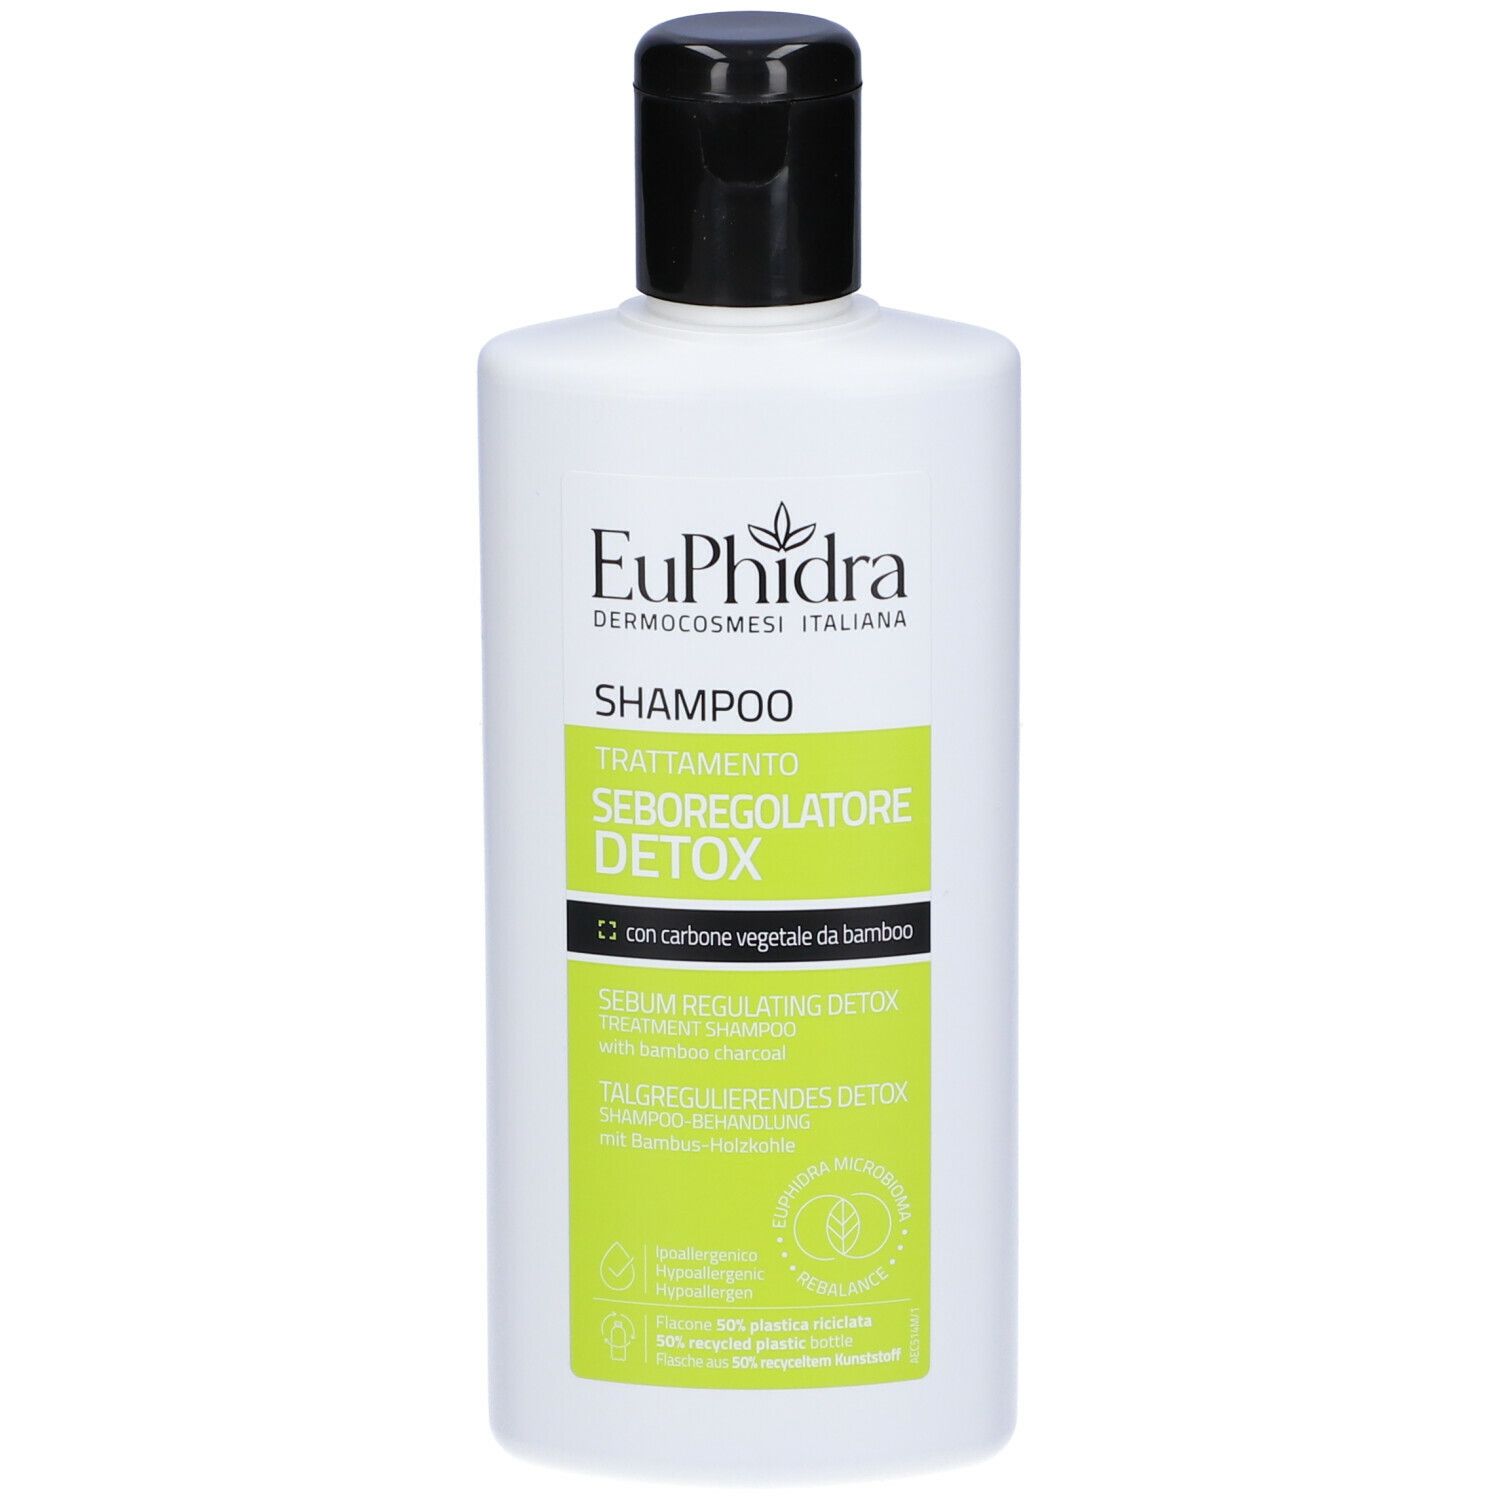 Image of Euphidra Shampoo Seboregolatore Detox